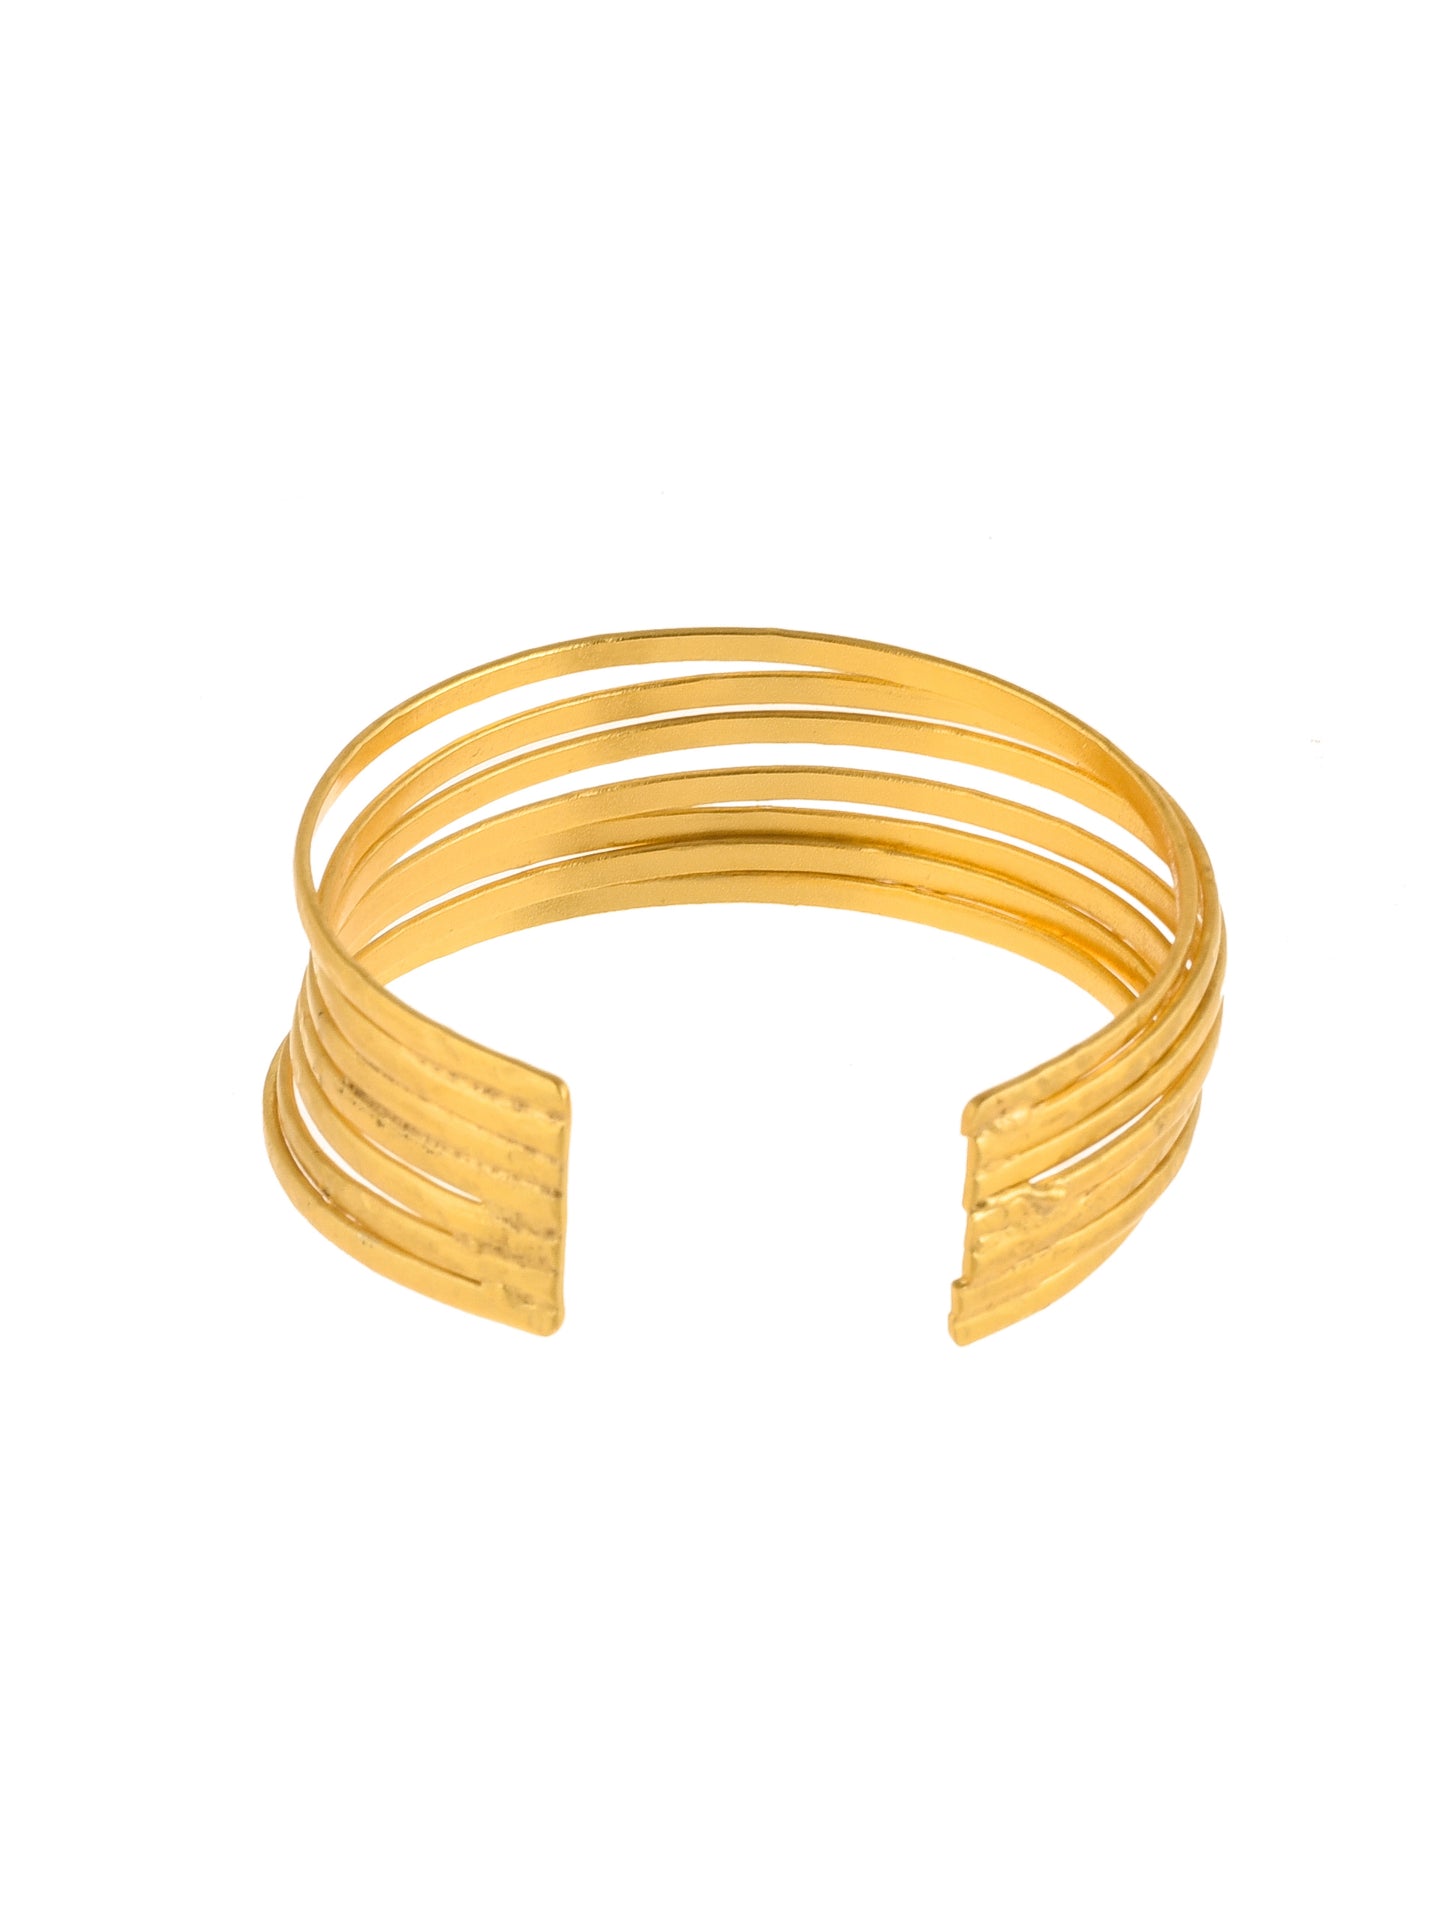 Contemporary hammered Brass bracelet